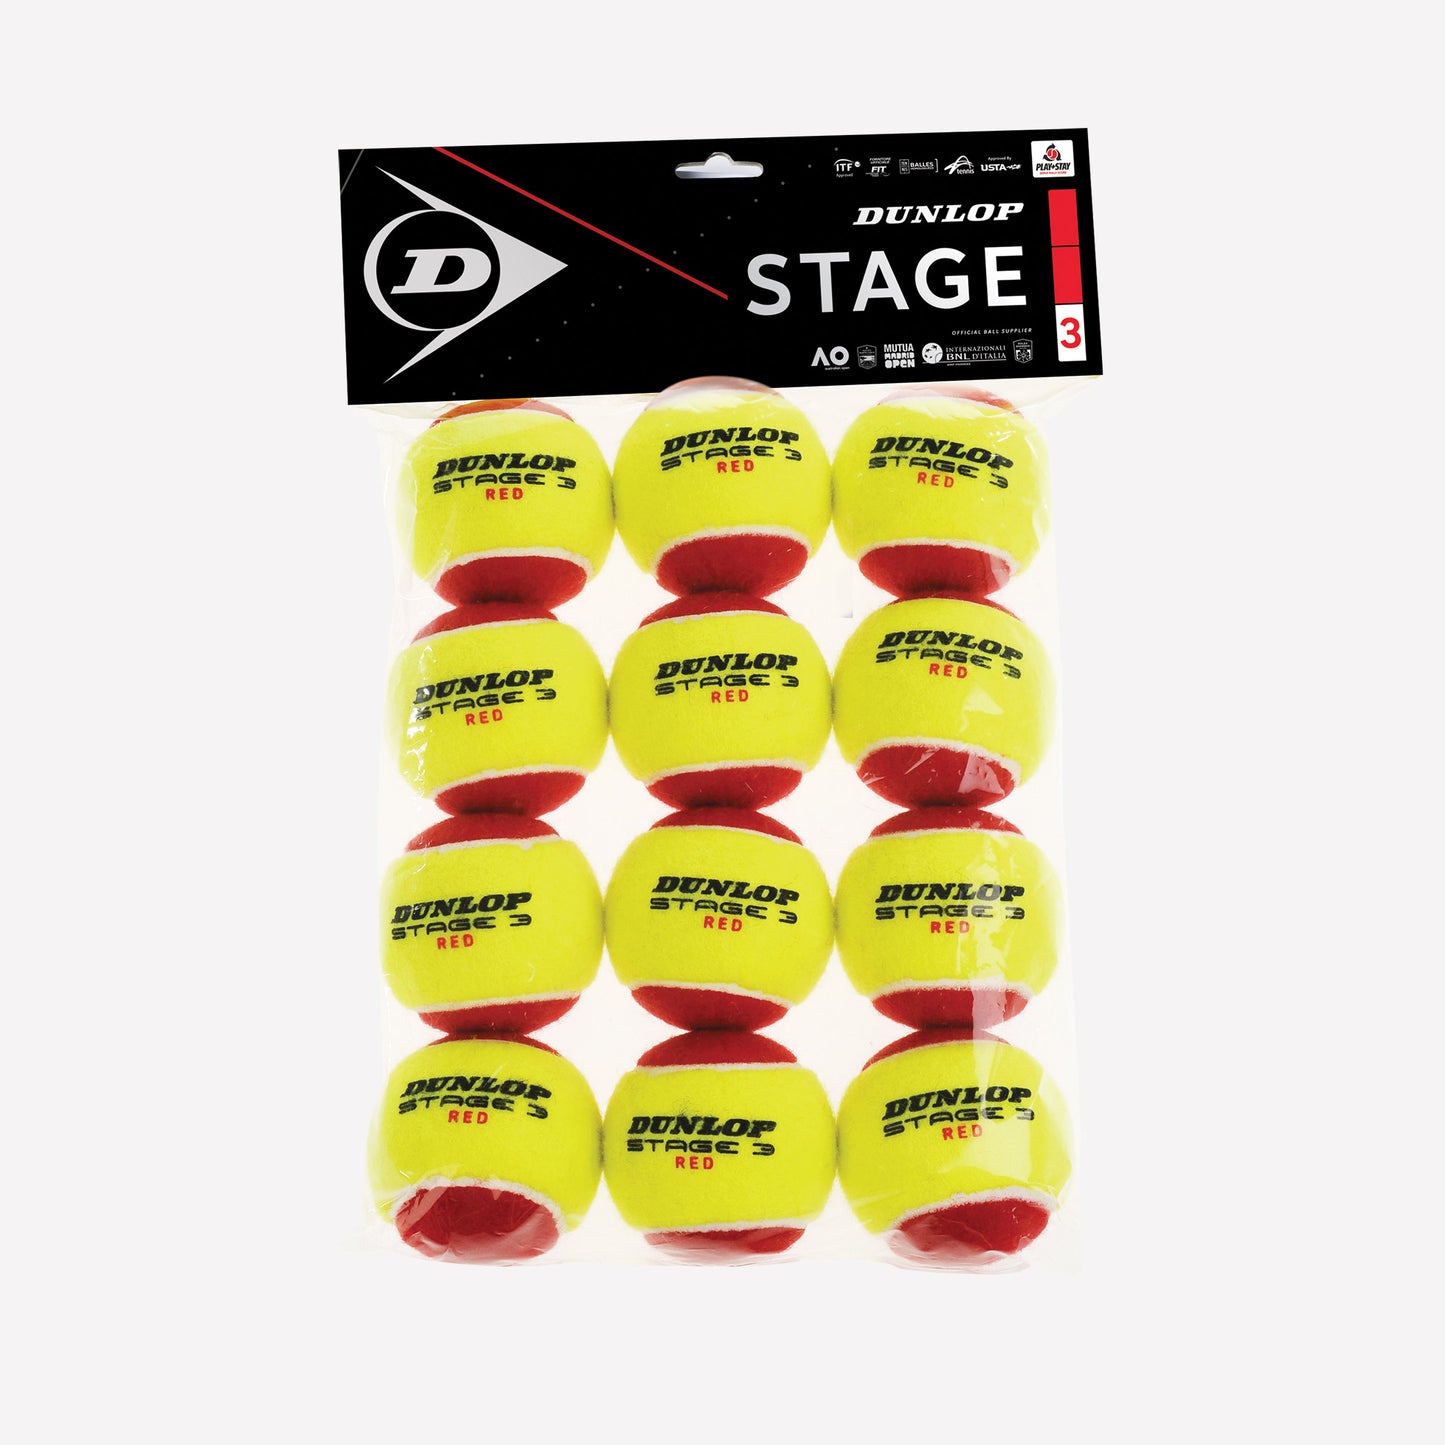 Dunlop Stage 3 Red  12 Tennis Balls 1